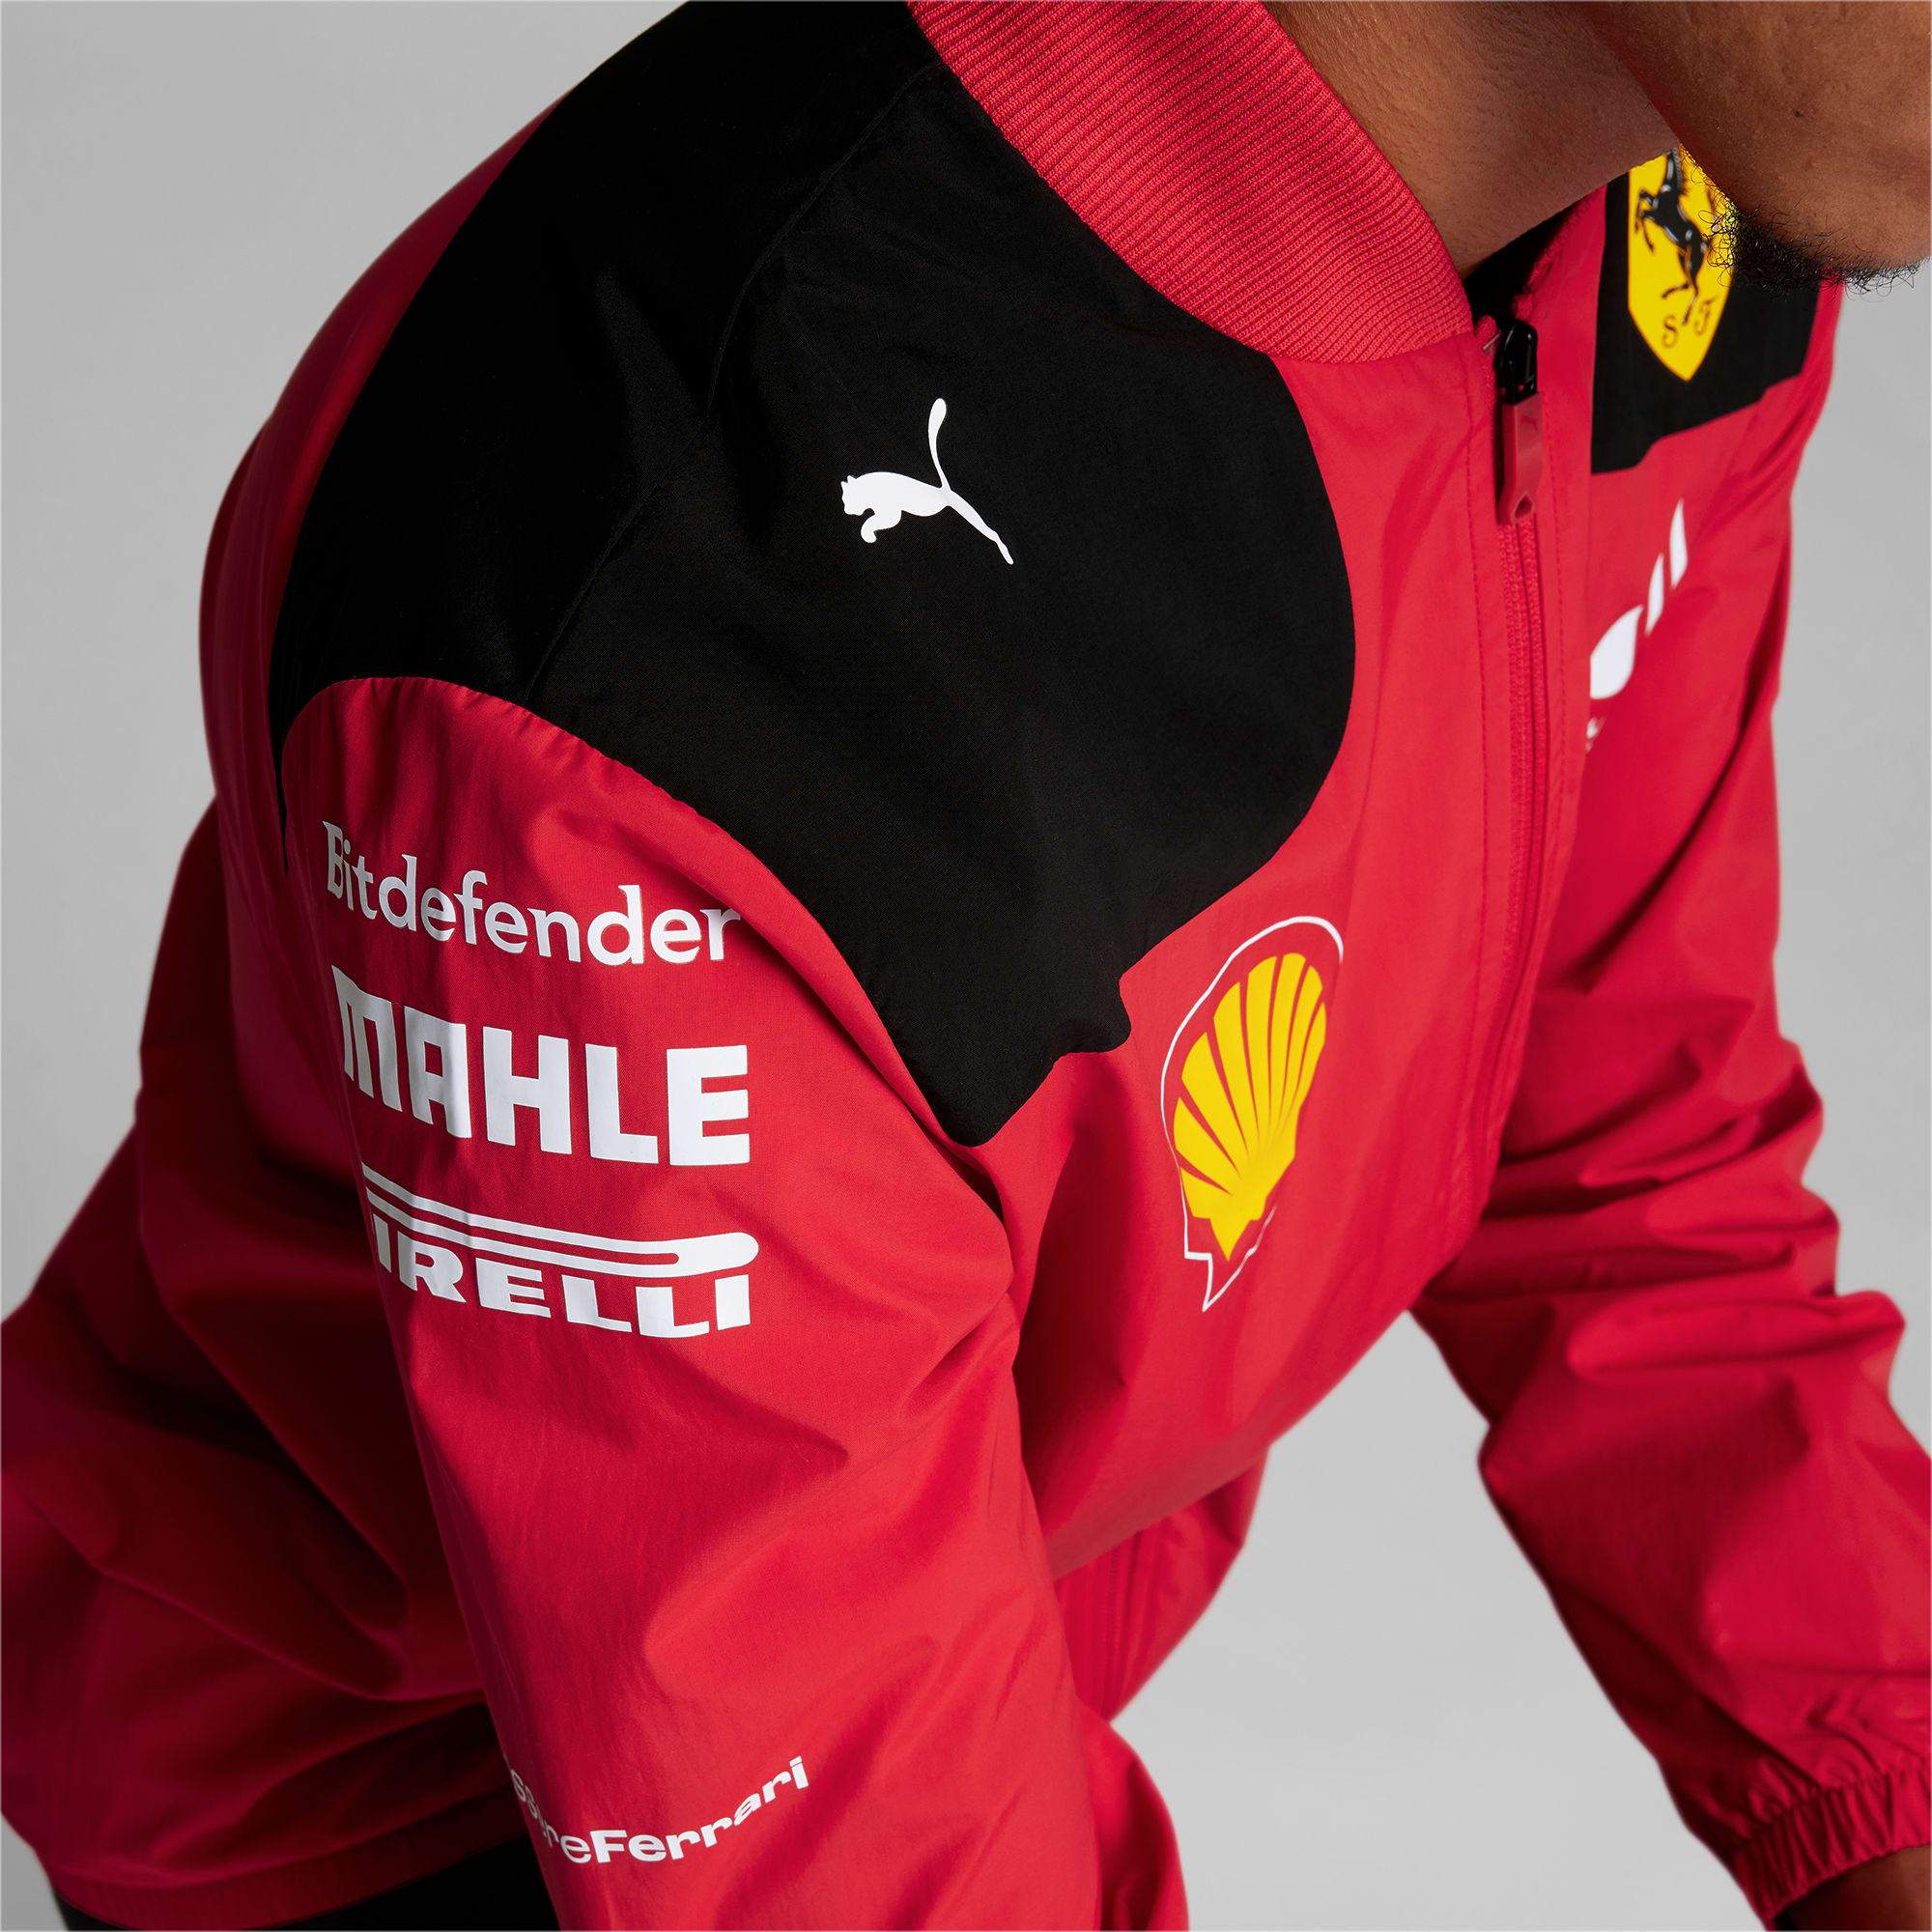 Scuderia Ferrari 2023 Team Replica Jacket